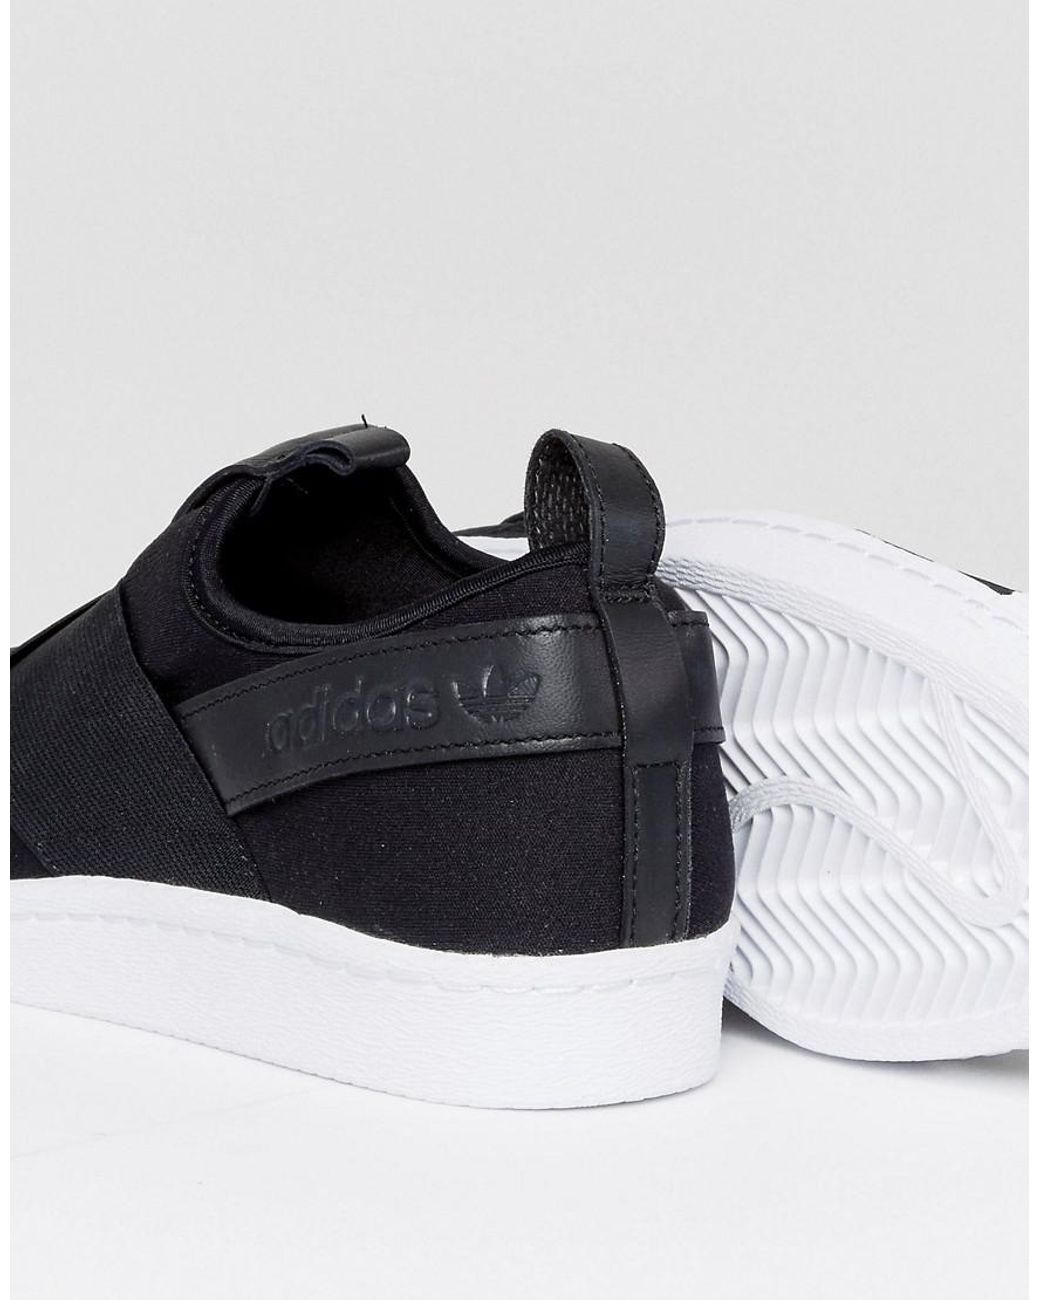 adidas Originals Men's Black Superstar Slip-on Sneakers